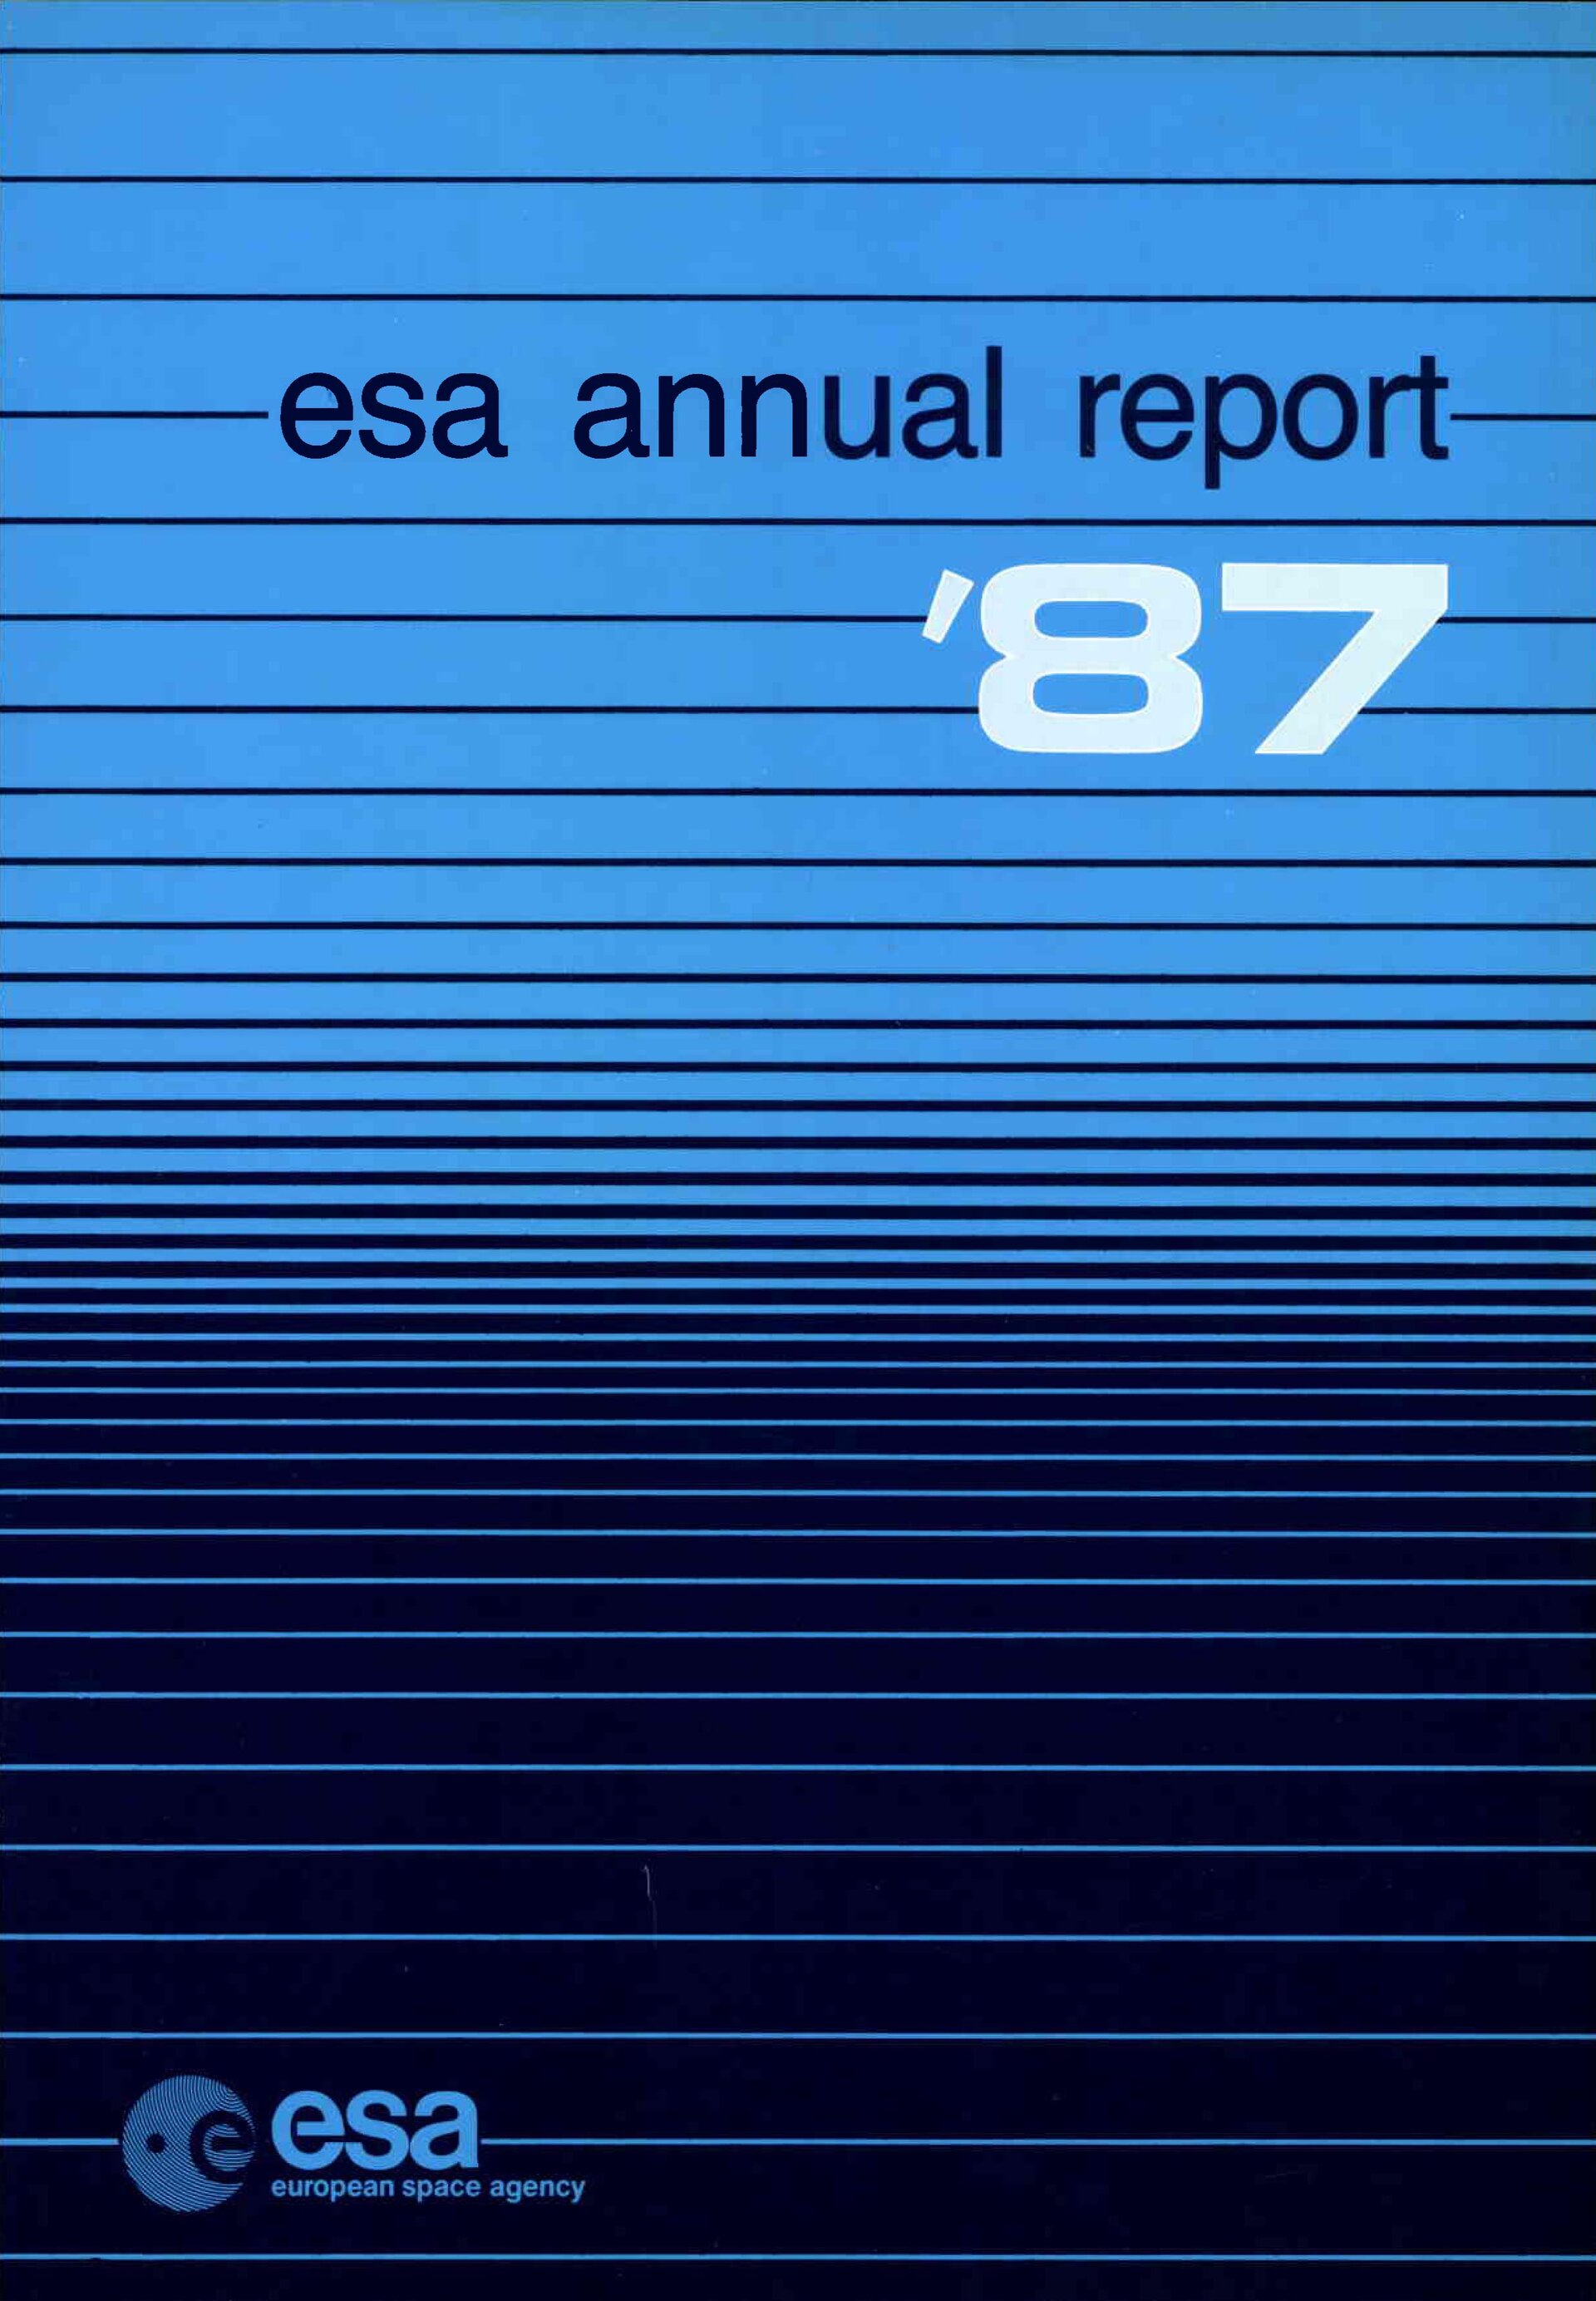 Annual Report 1987 cover